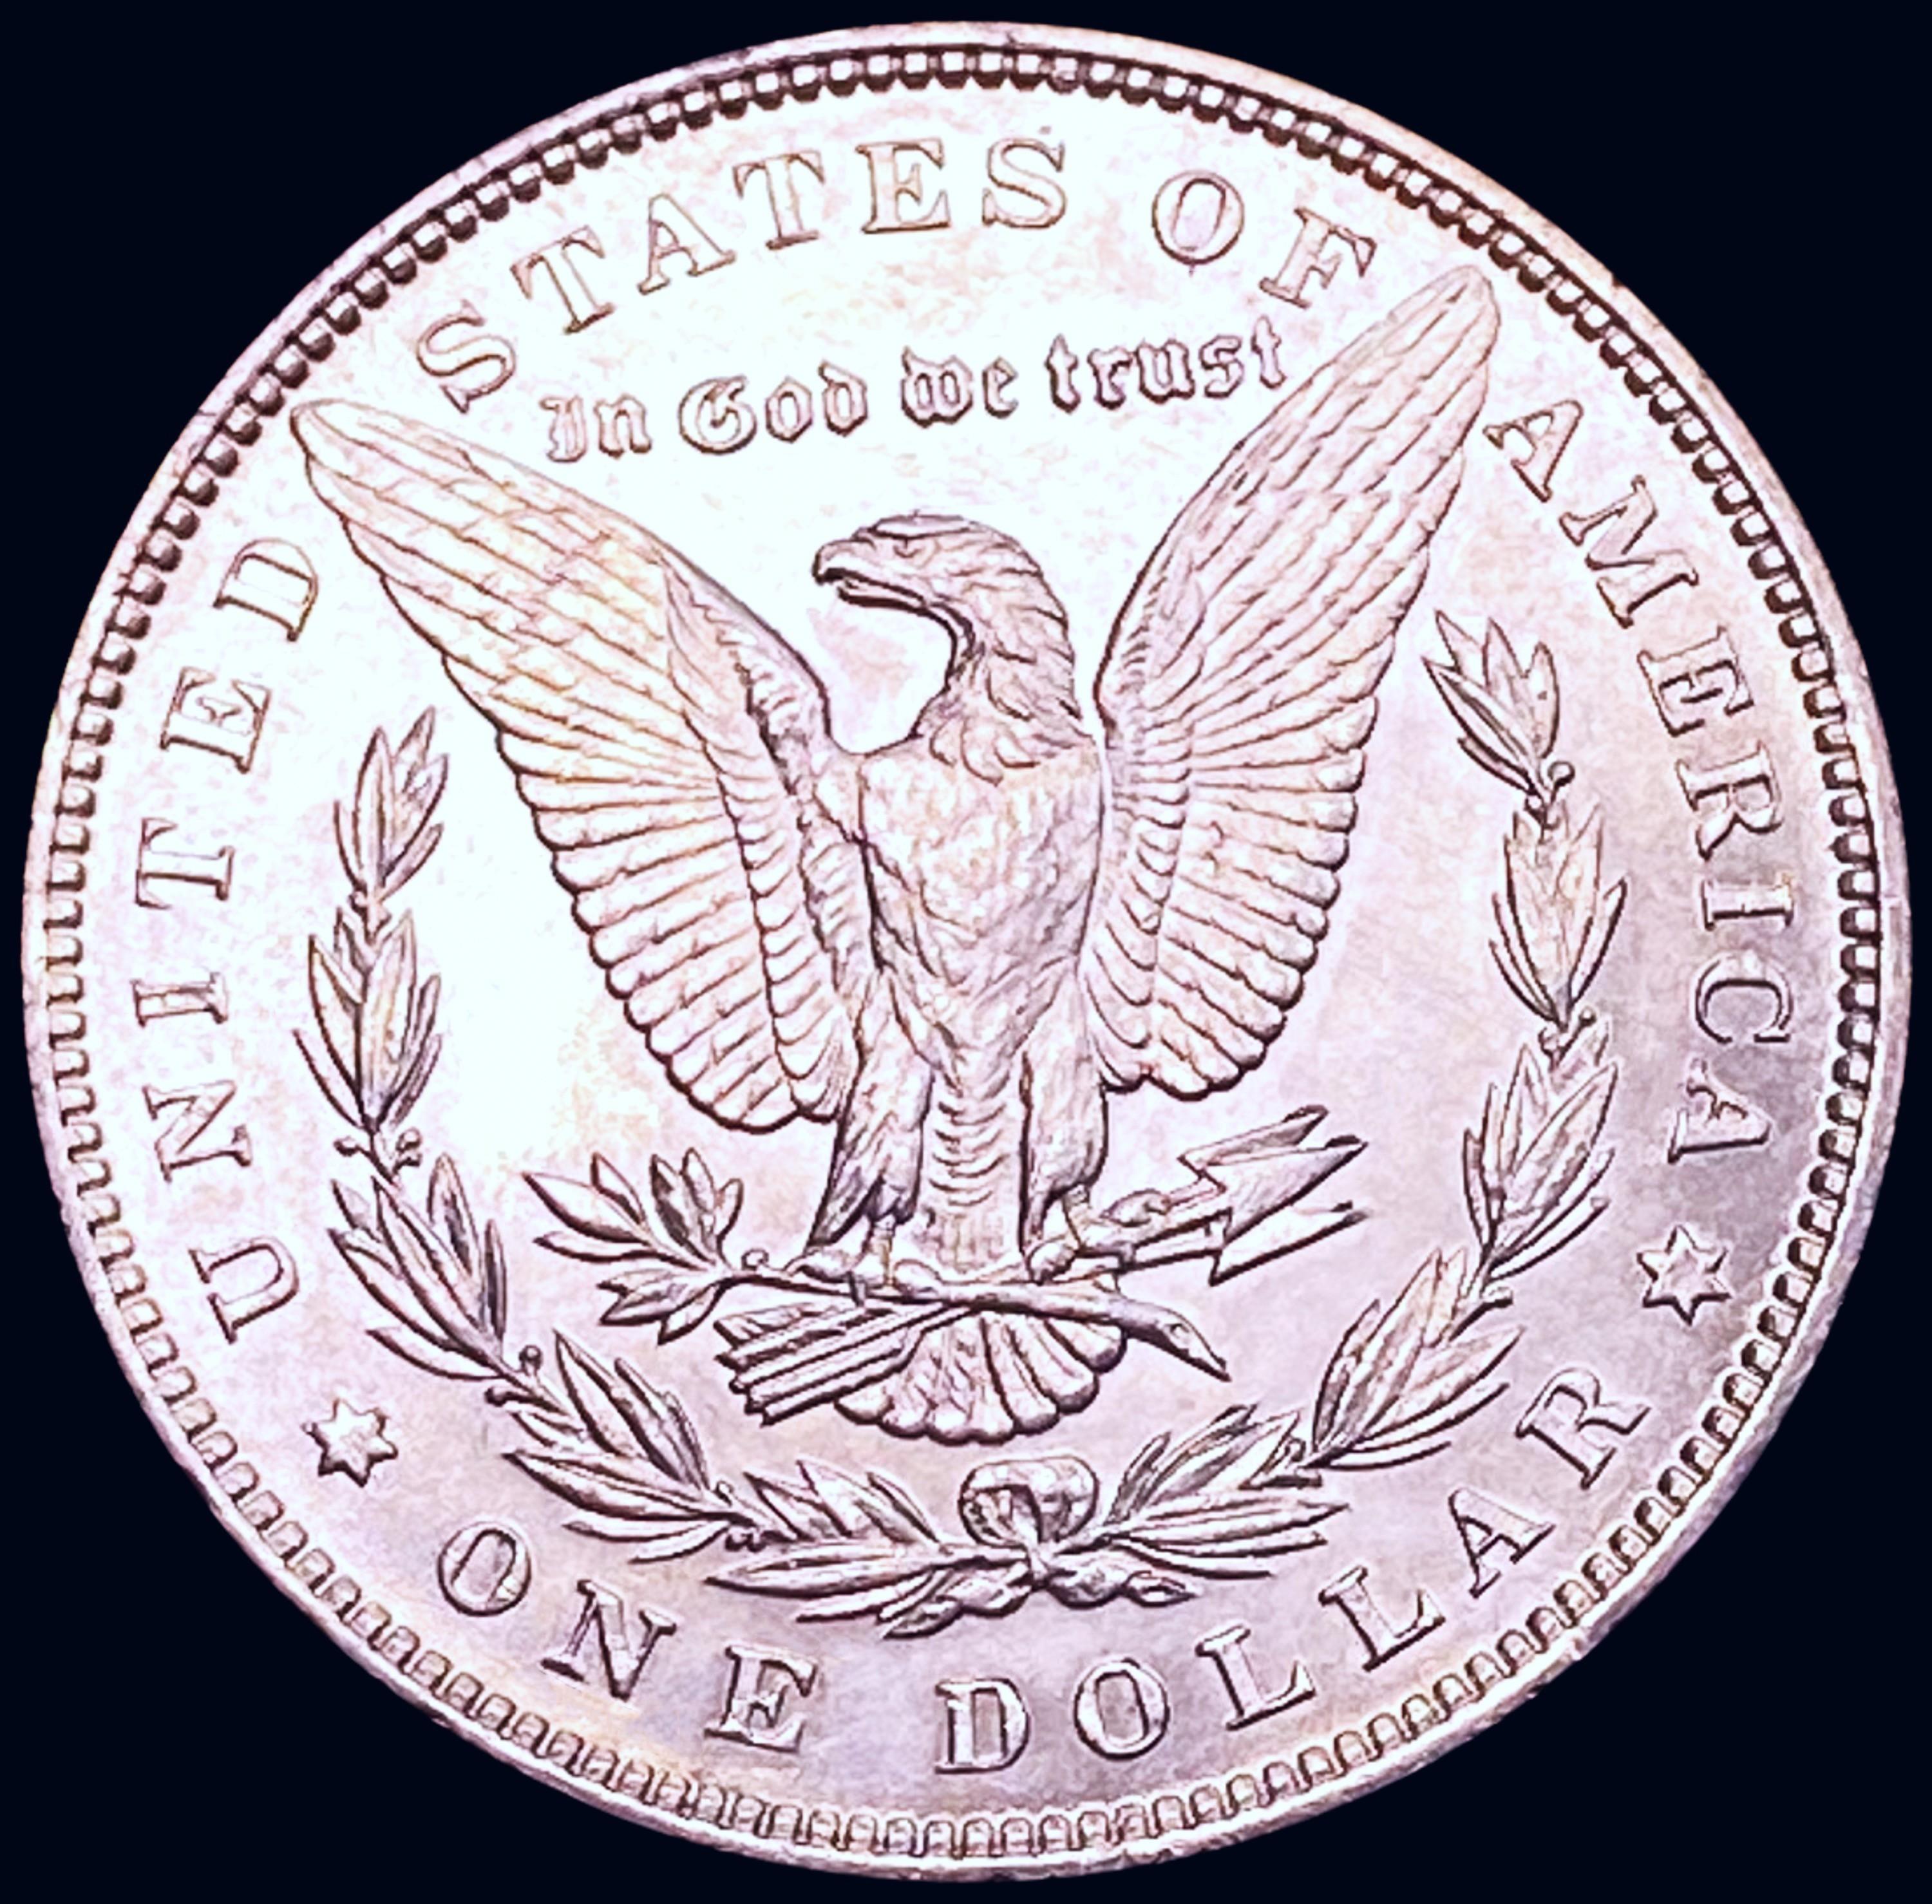 1894 Morgan Silver Dollar CHOICE BU